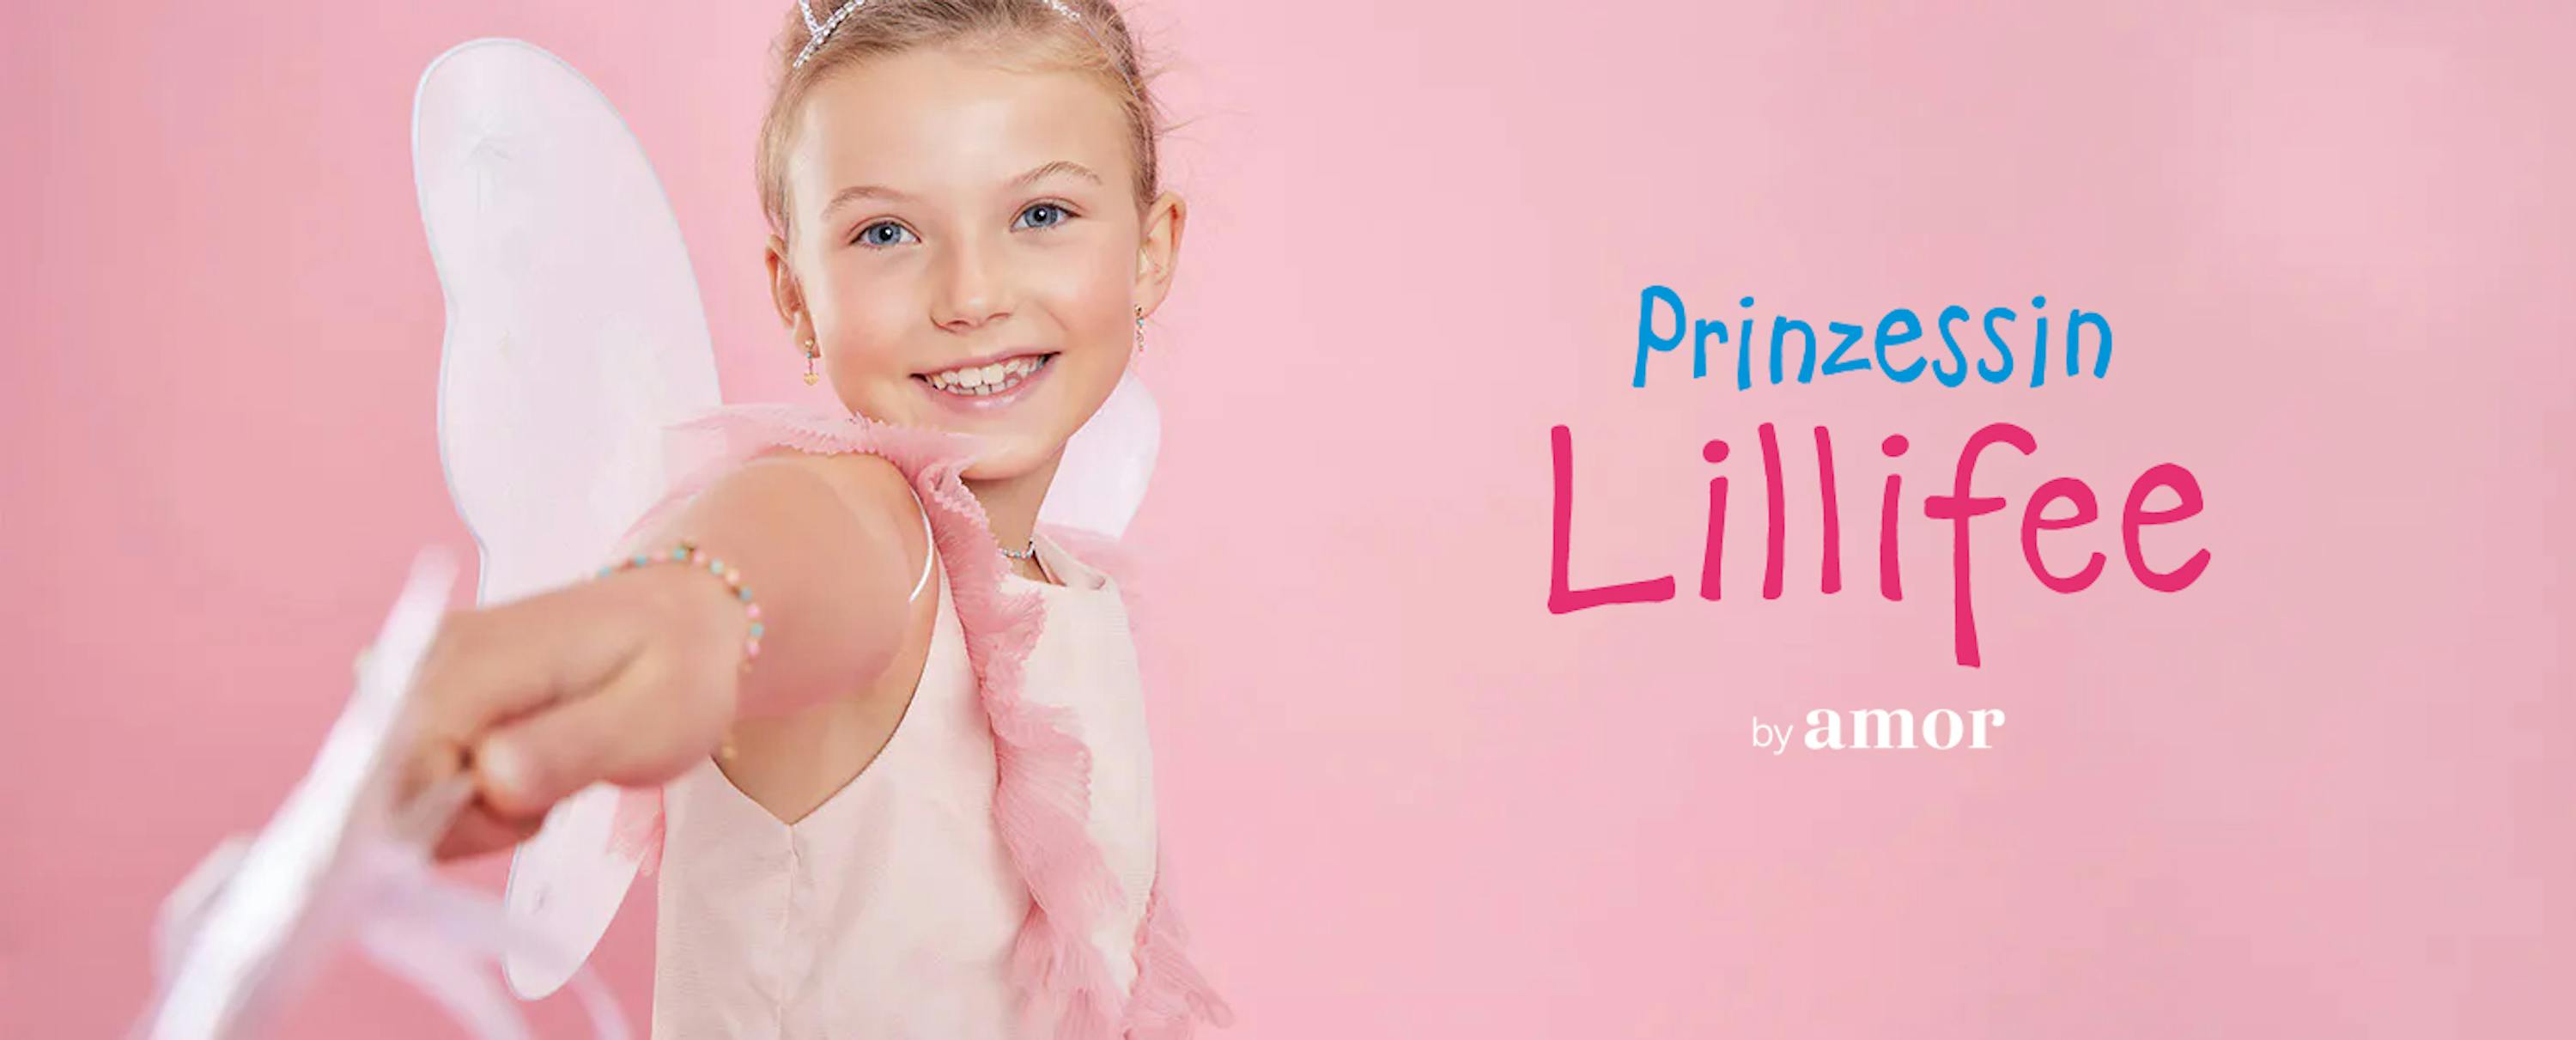 Prinzessin Lillifee Schmuck | Amor Shop Online